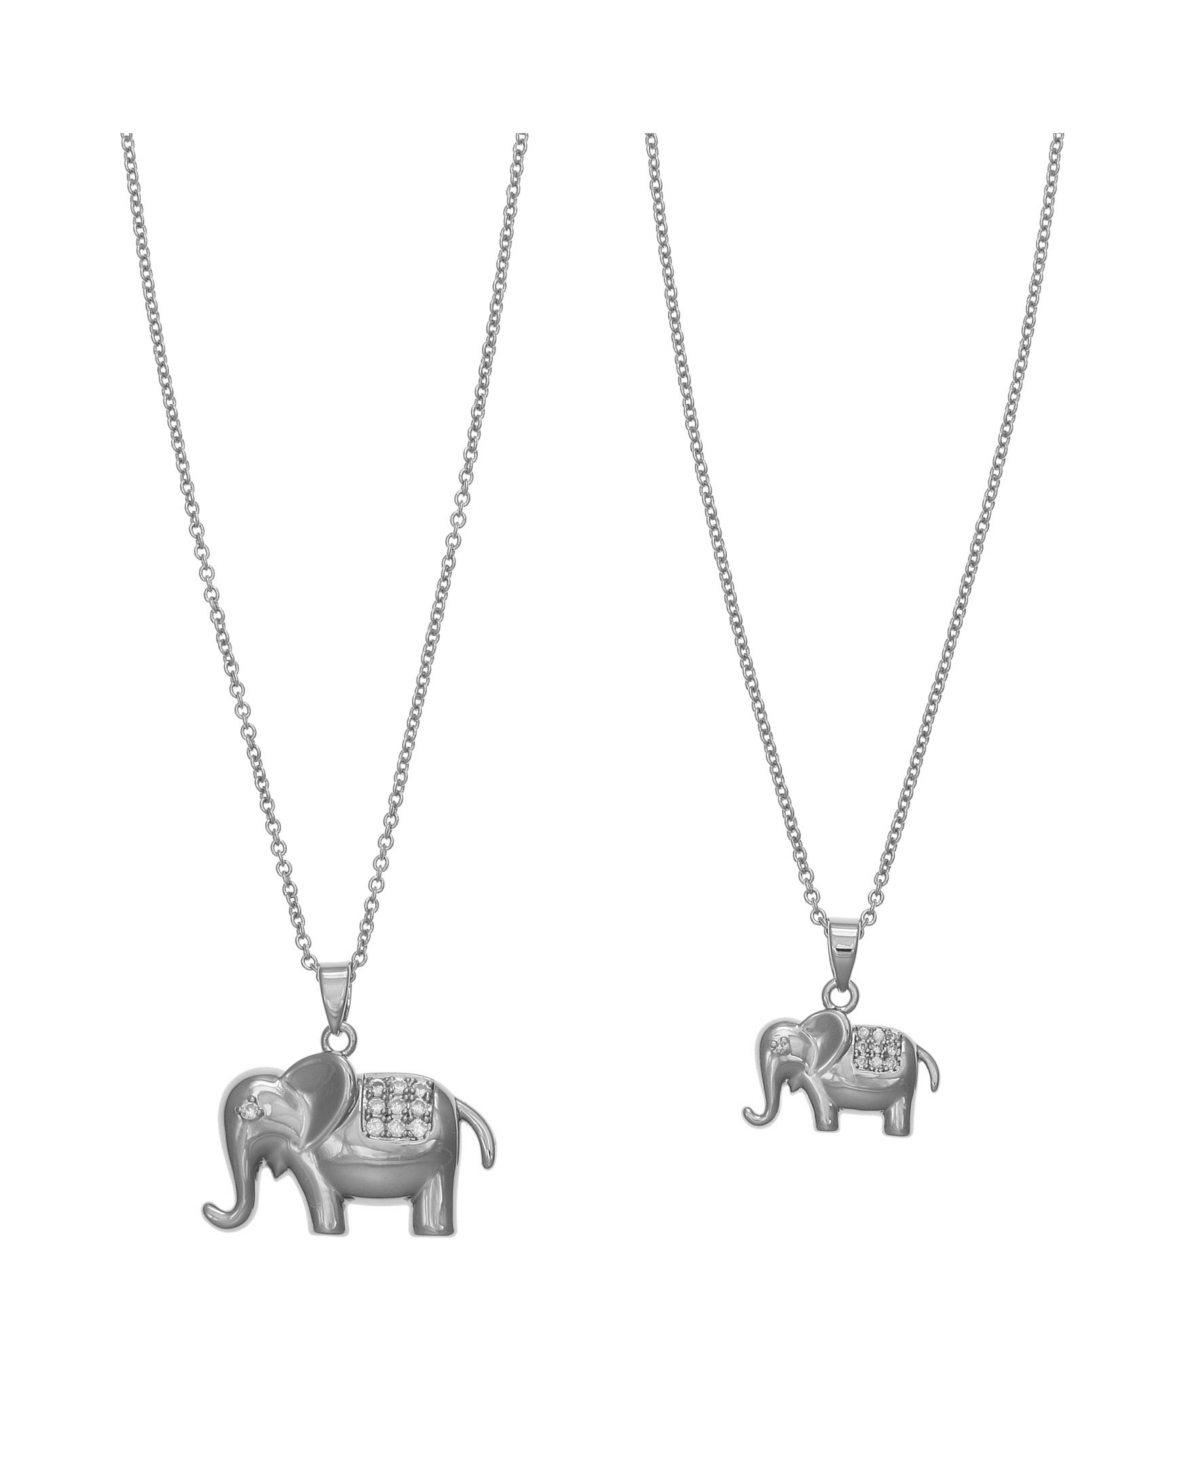 Fao Schwarz Women's Elephant Shape Pendant Necklace Set, 2 Piece